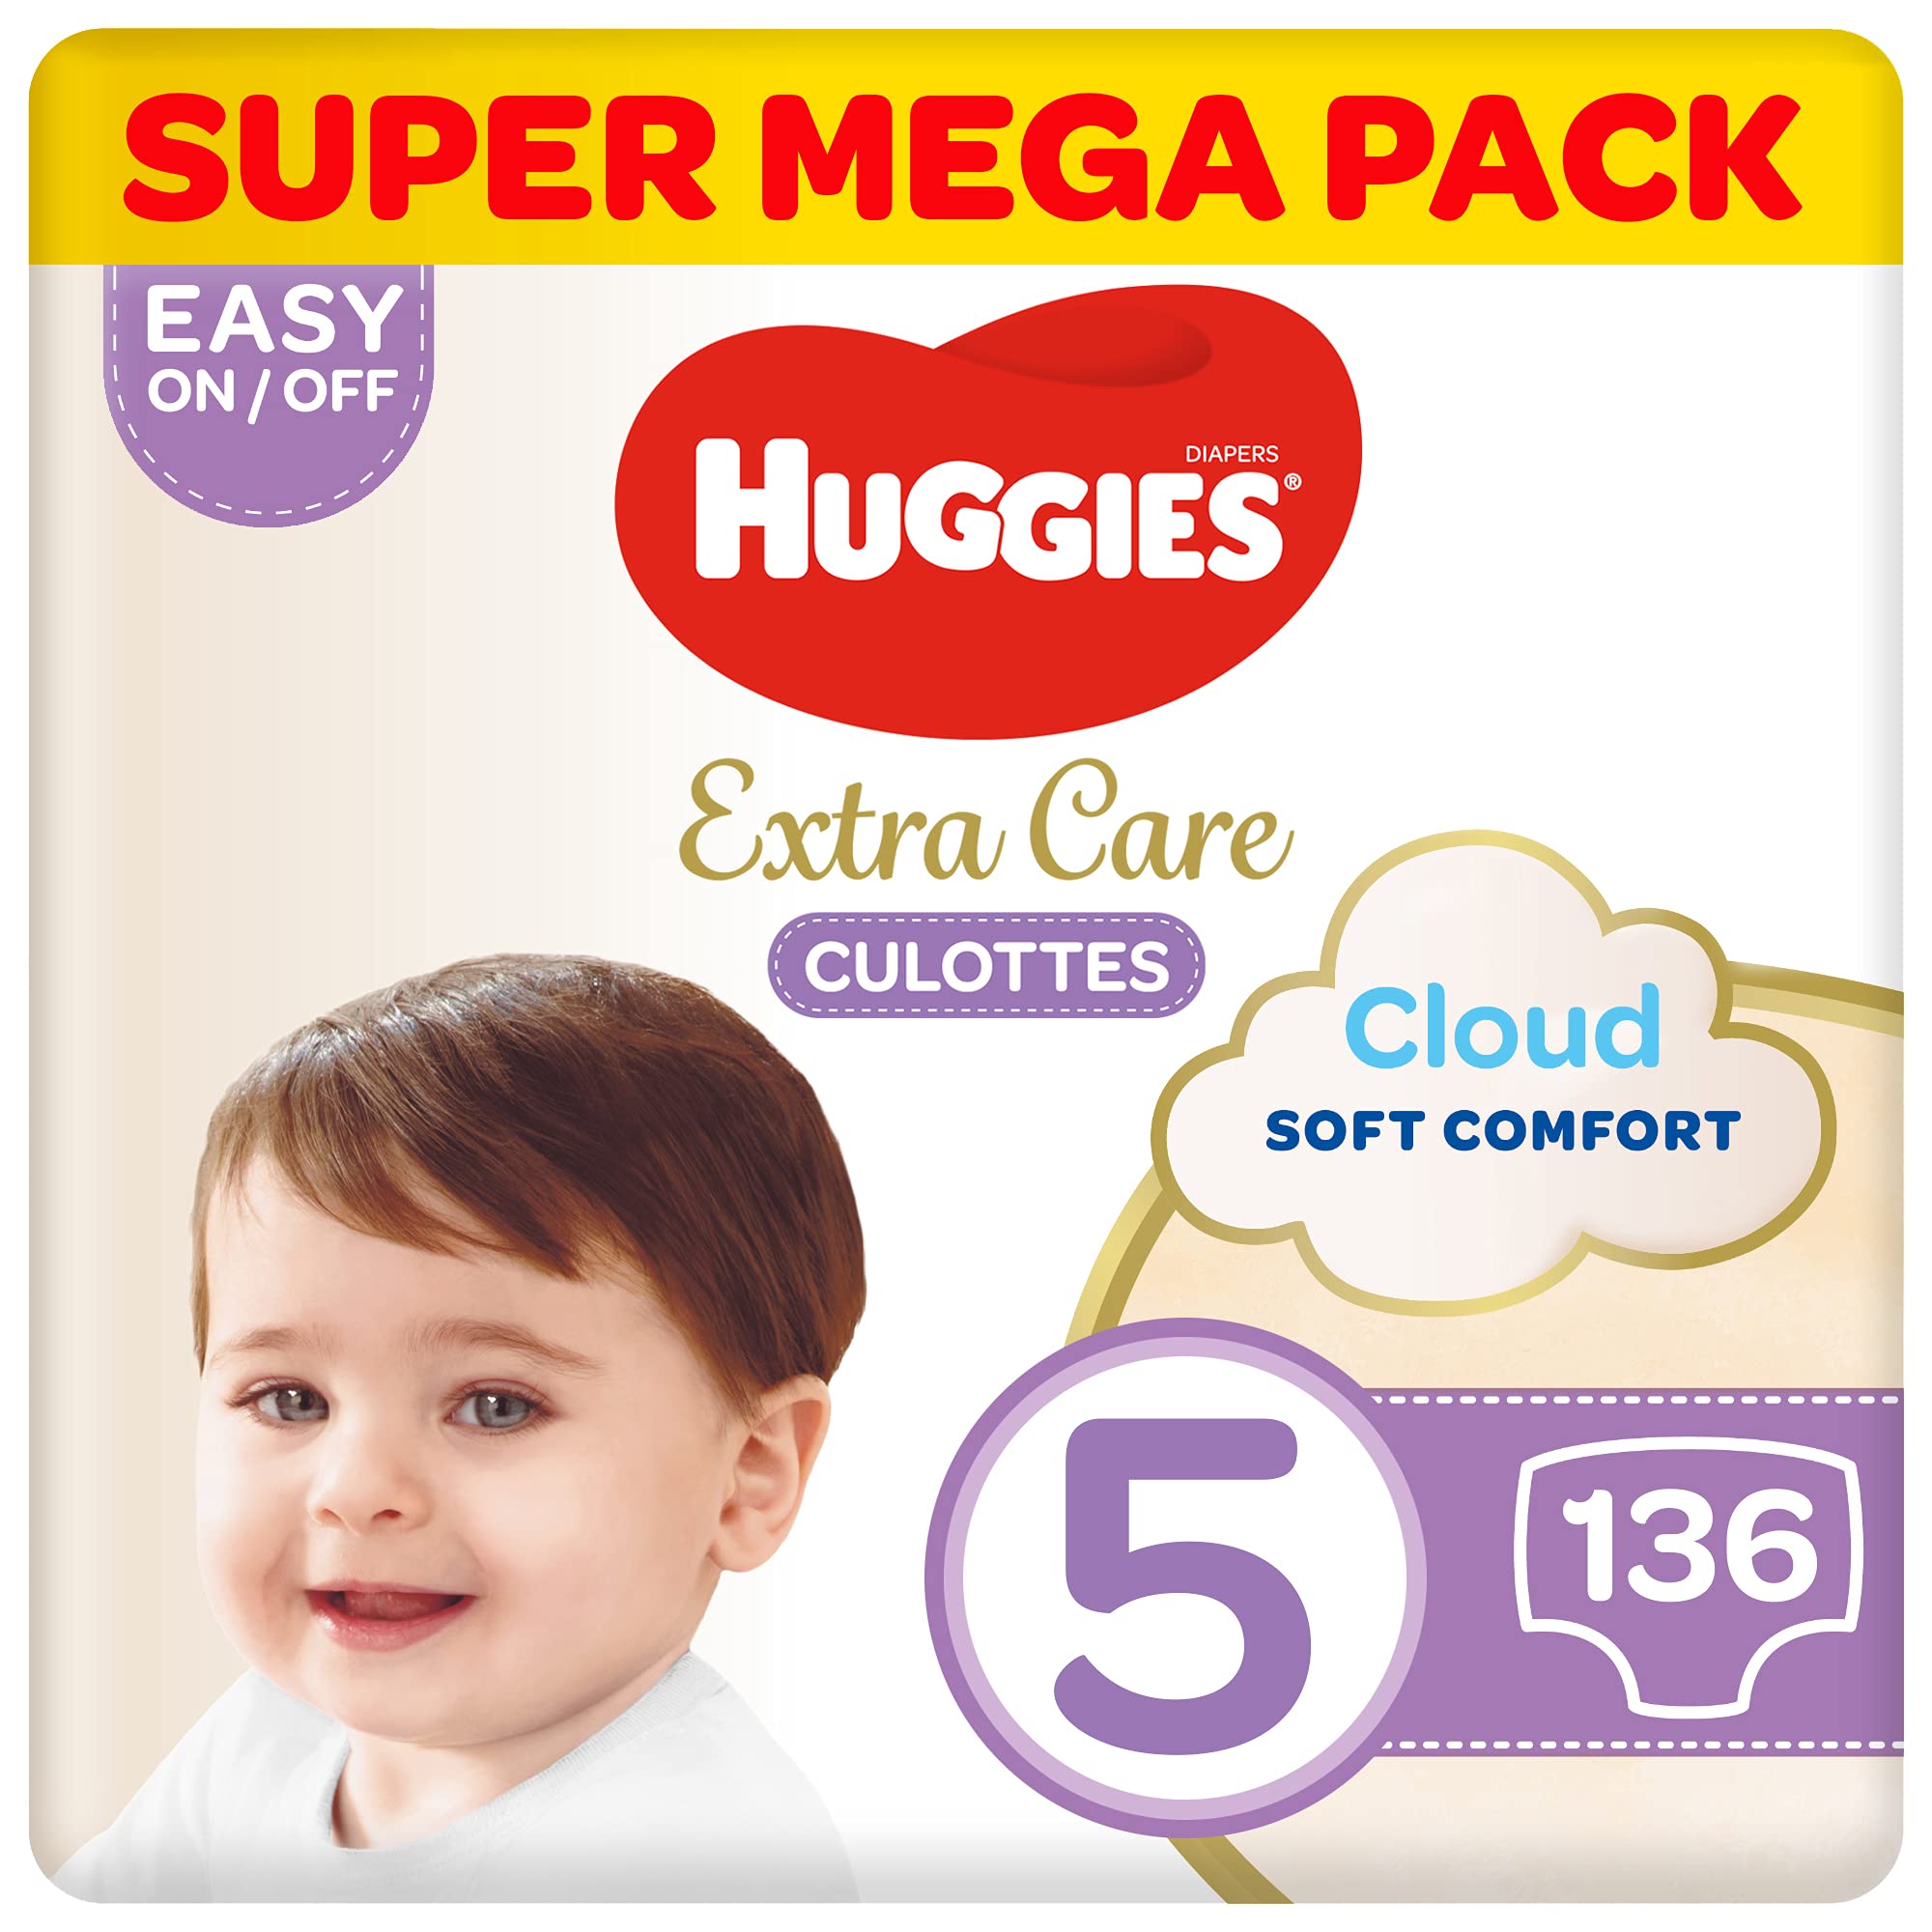 Huggies Extra Care Pants - Size 5, Super Mega Pack, 12-17 kg, 136 Diaper سروال حفاضة اكسترا كير من هاغيز - مقاس 5، عبوة سوبر ميجا، 12 - 17 كغم، 136 قطعة